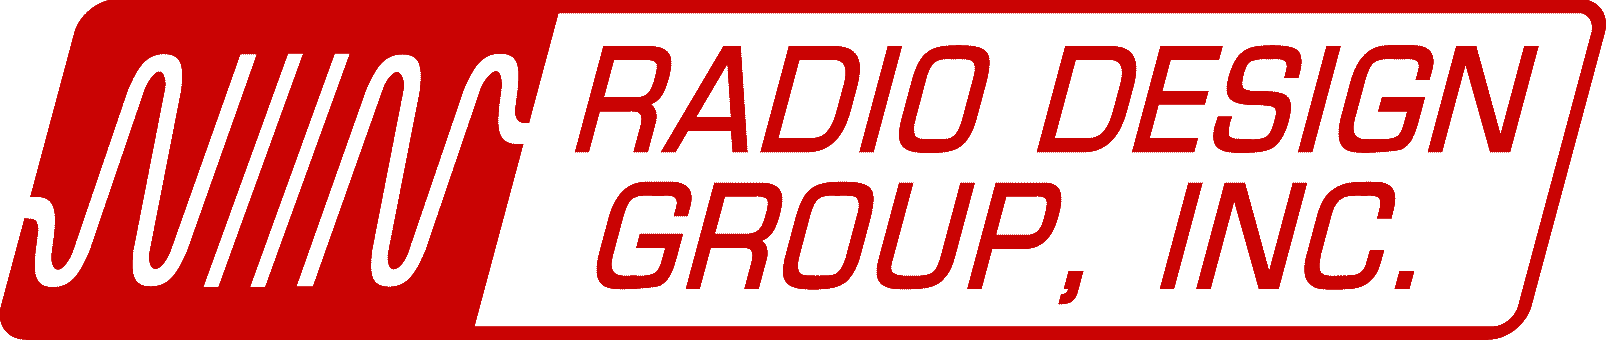 Radio Design Group, Inc.